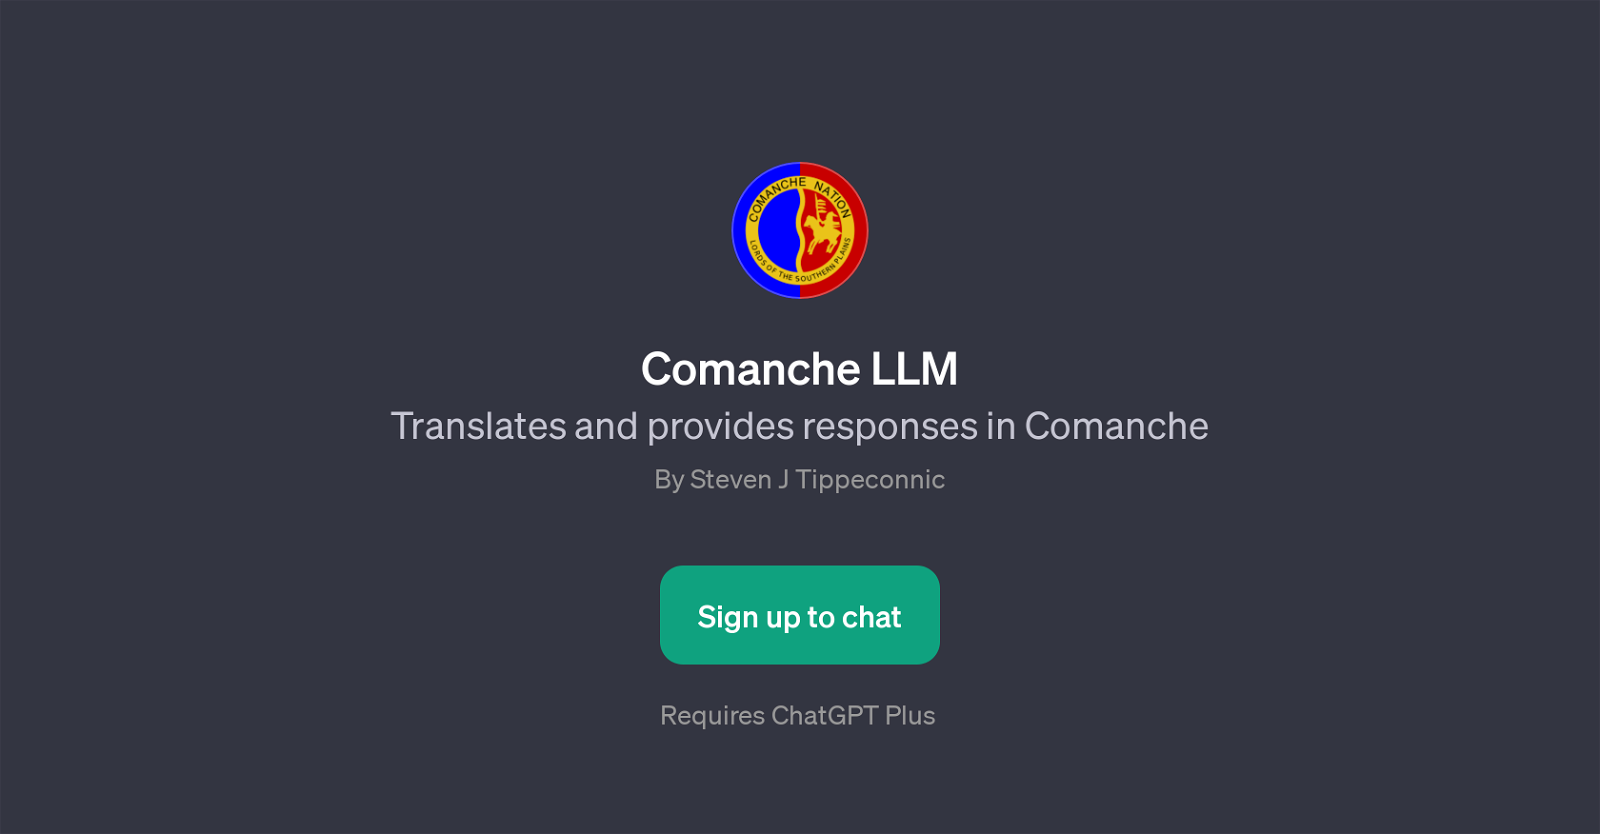 Comanche LLM website